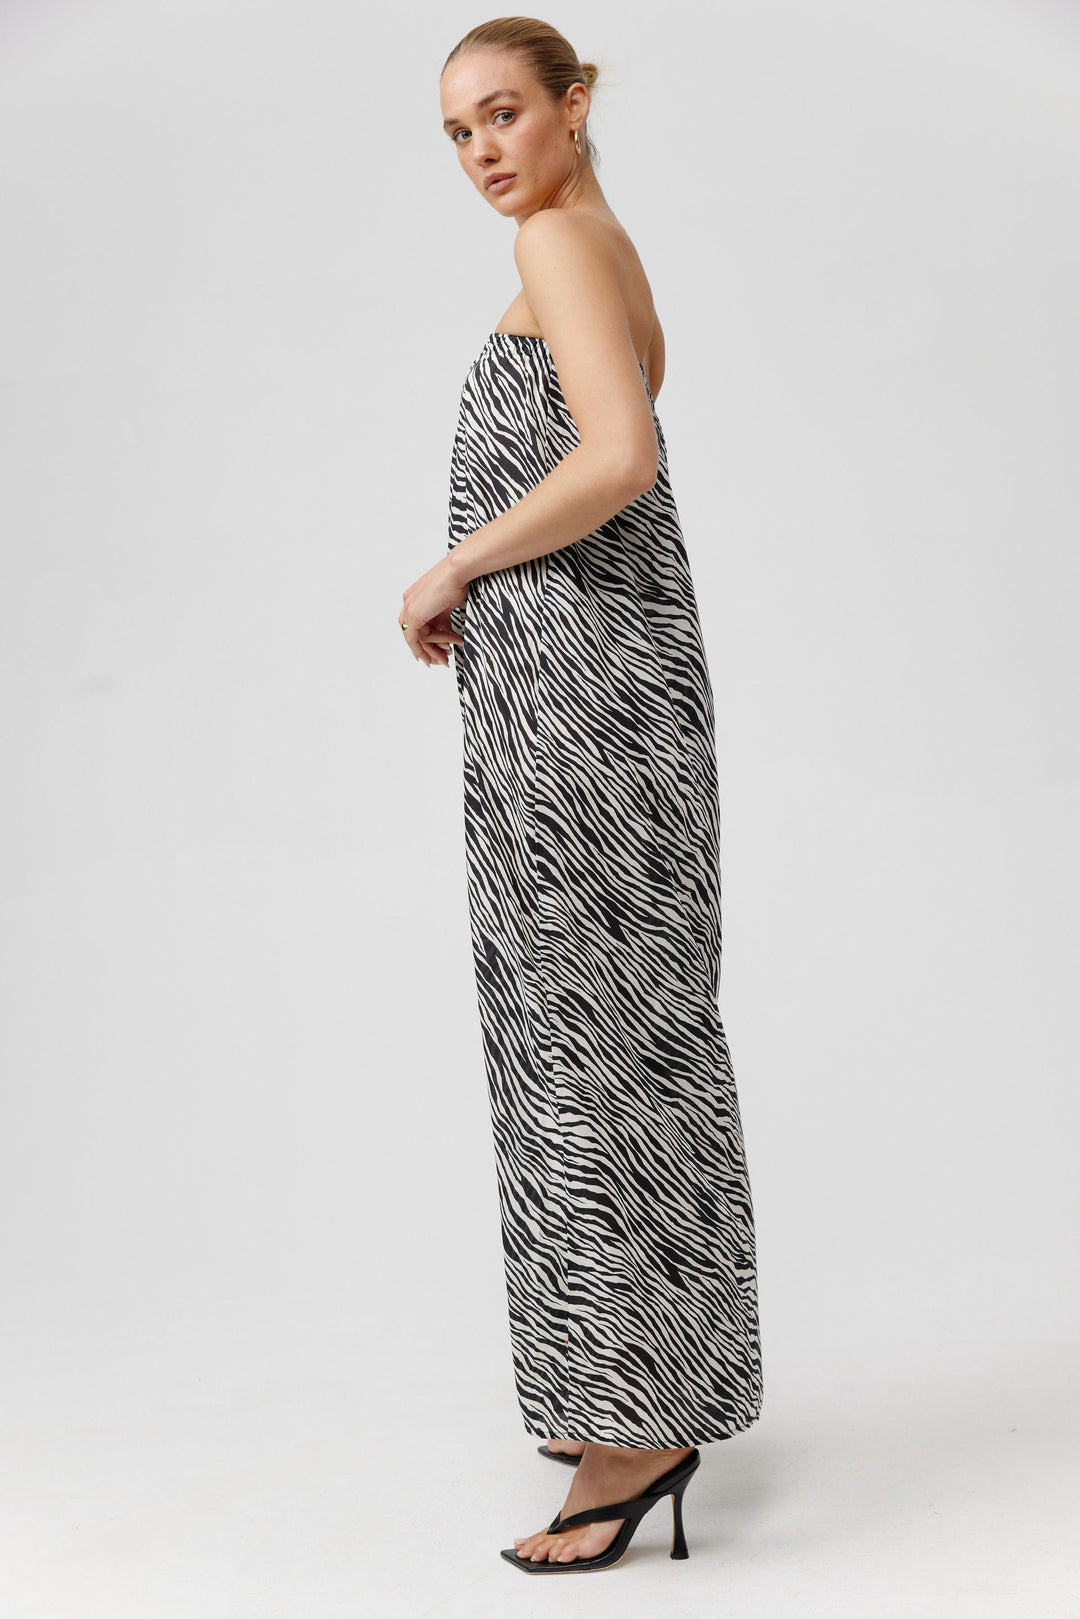 Kinney Nola Dress - Zebra - Shop 9